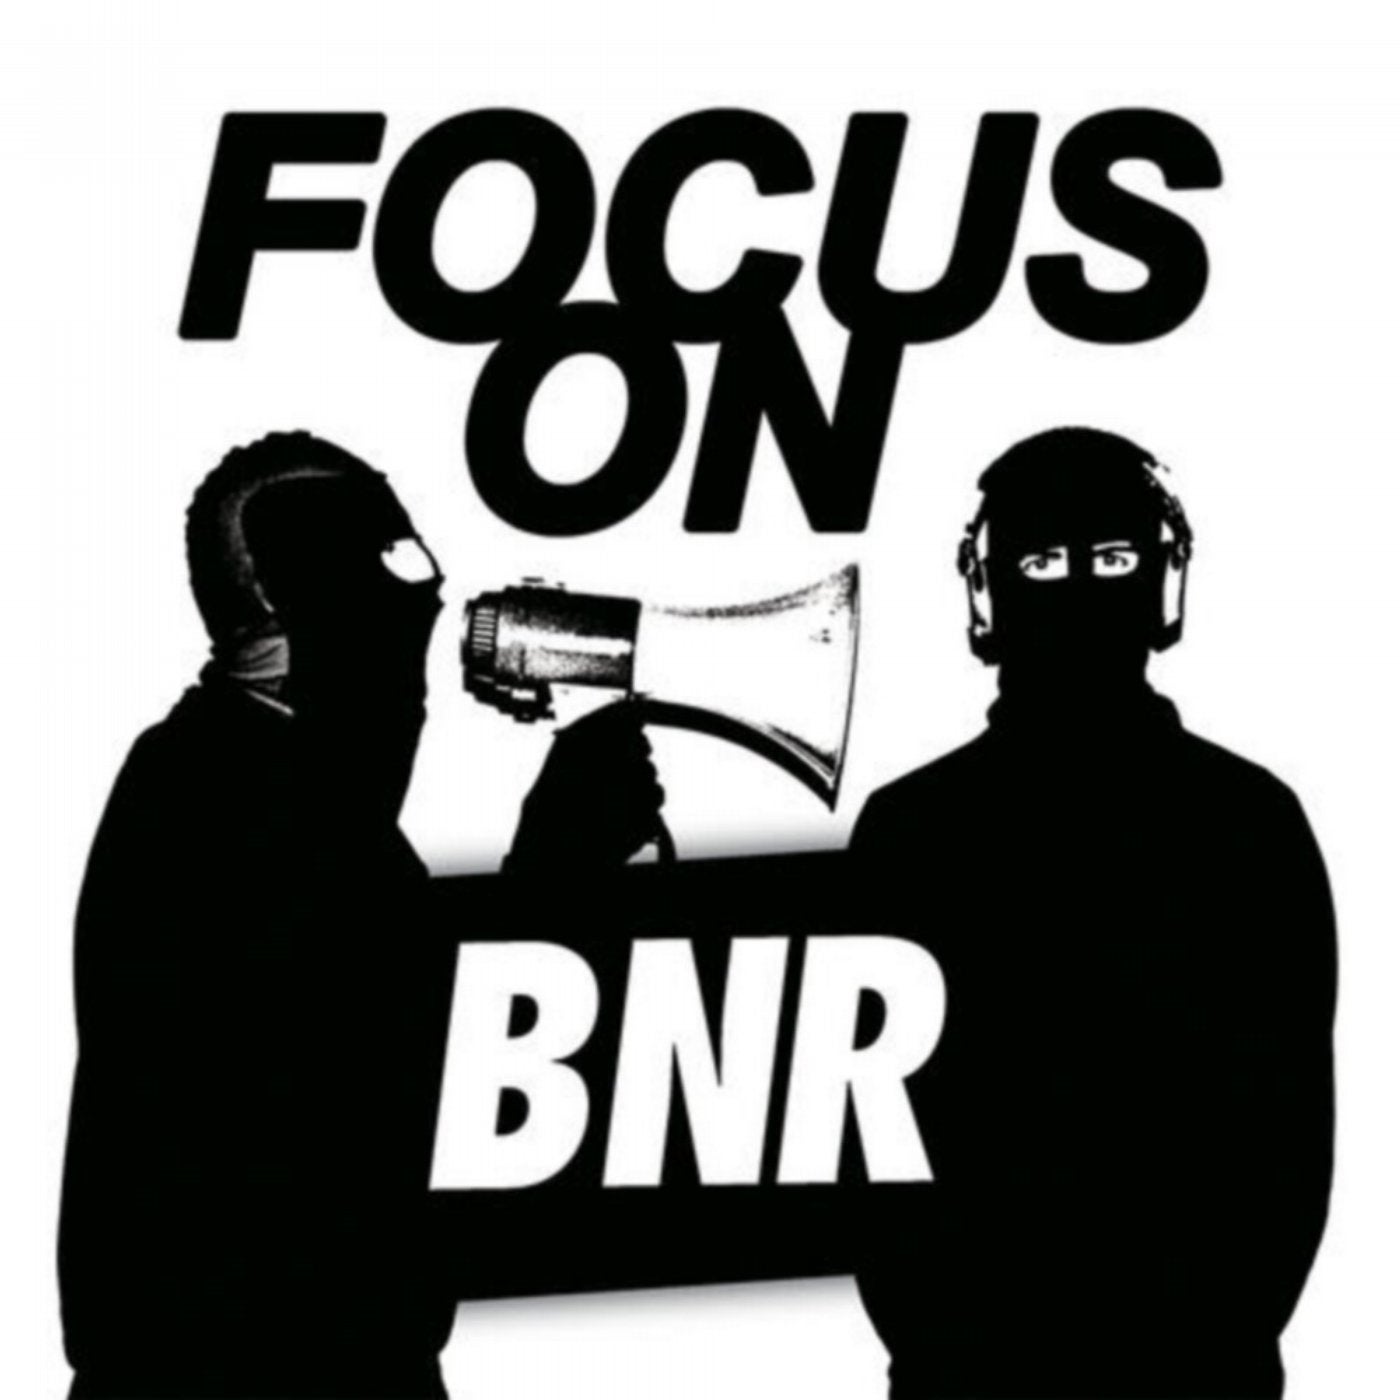 Focus On: Boysnoize Records